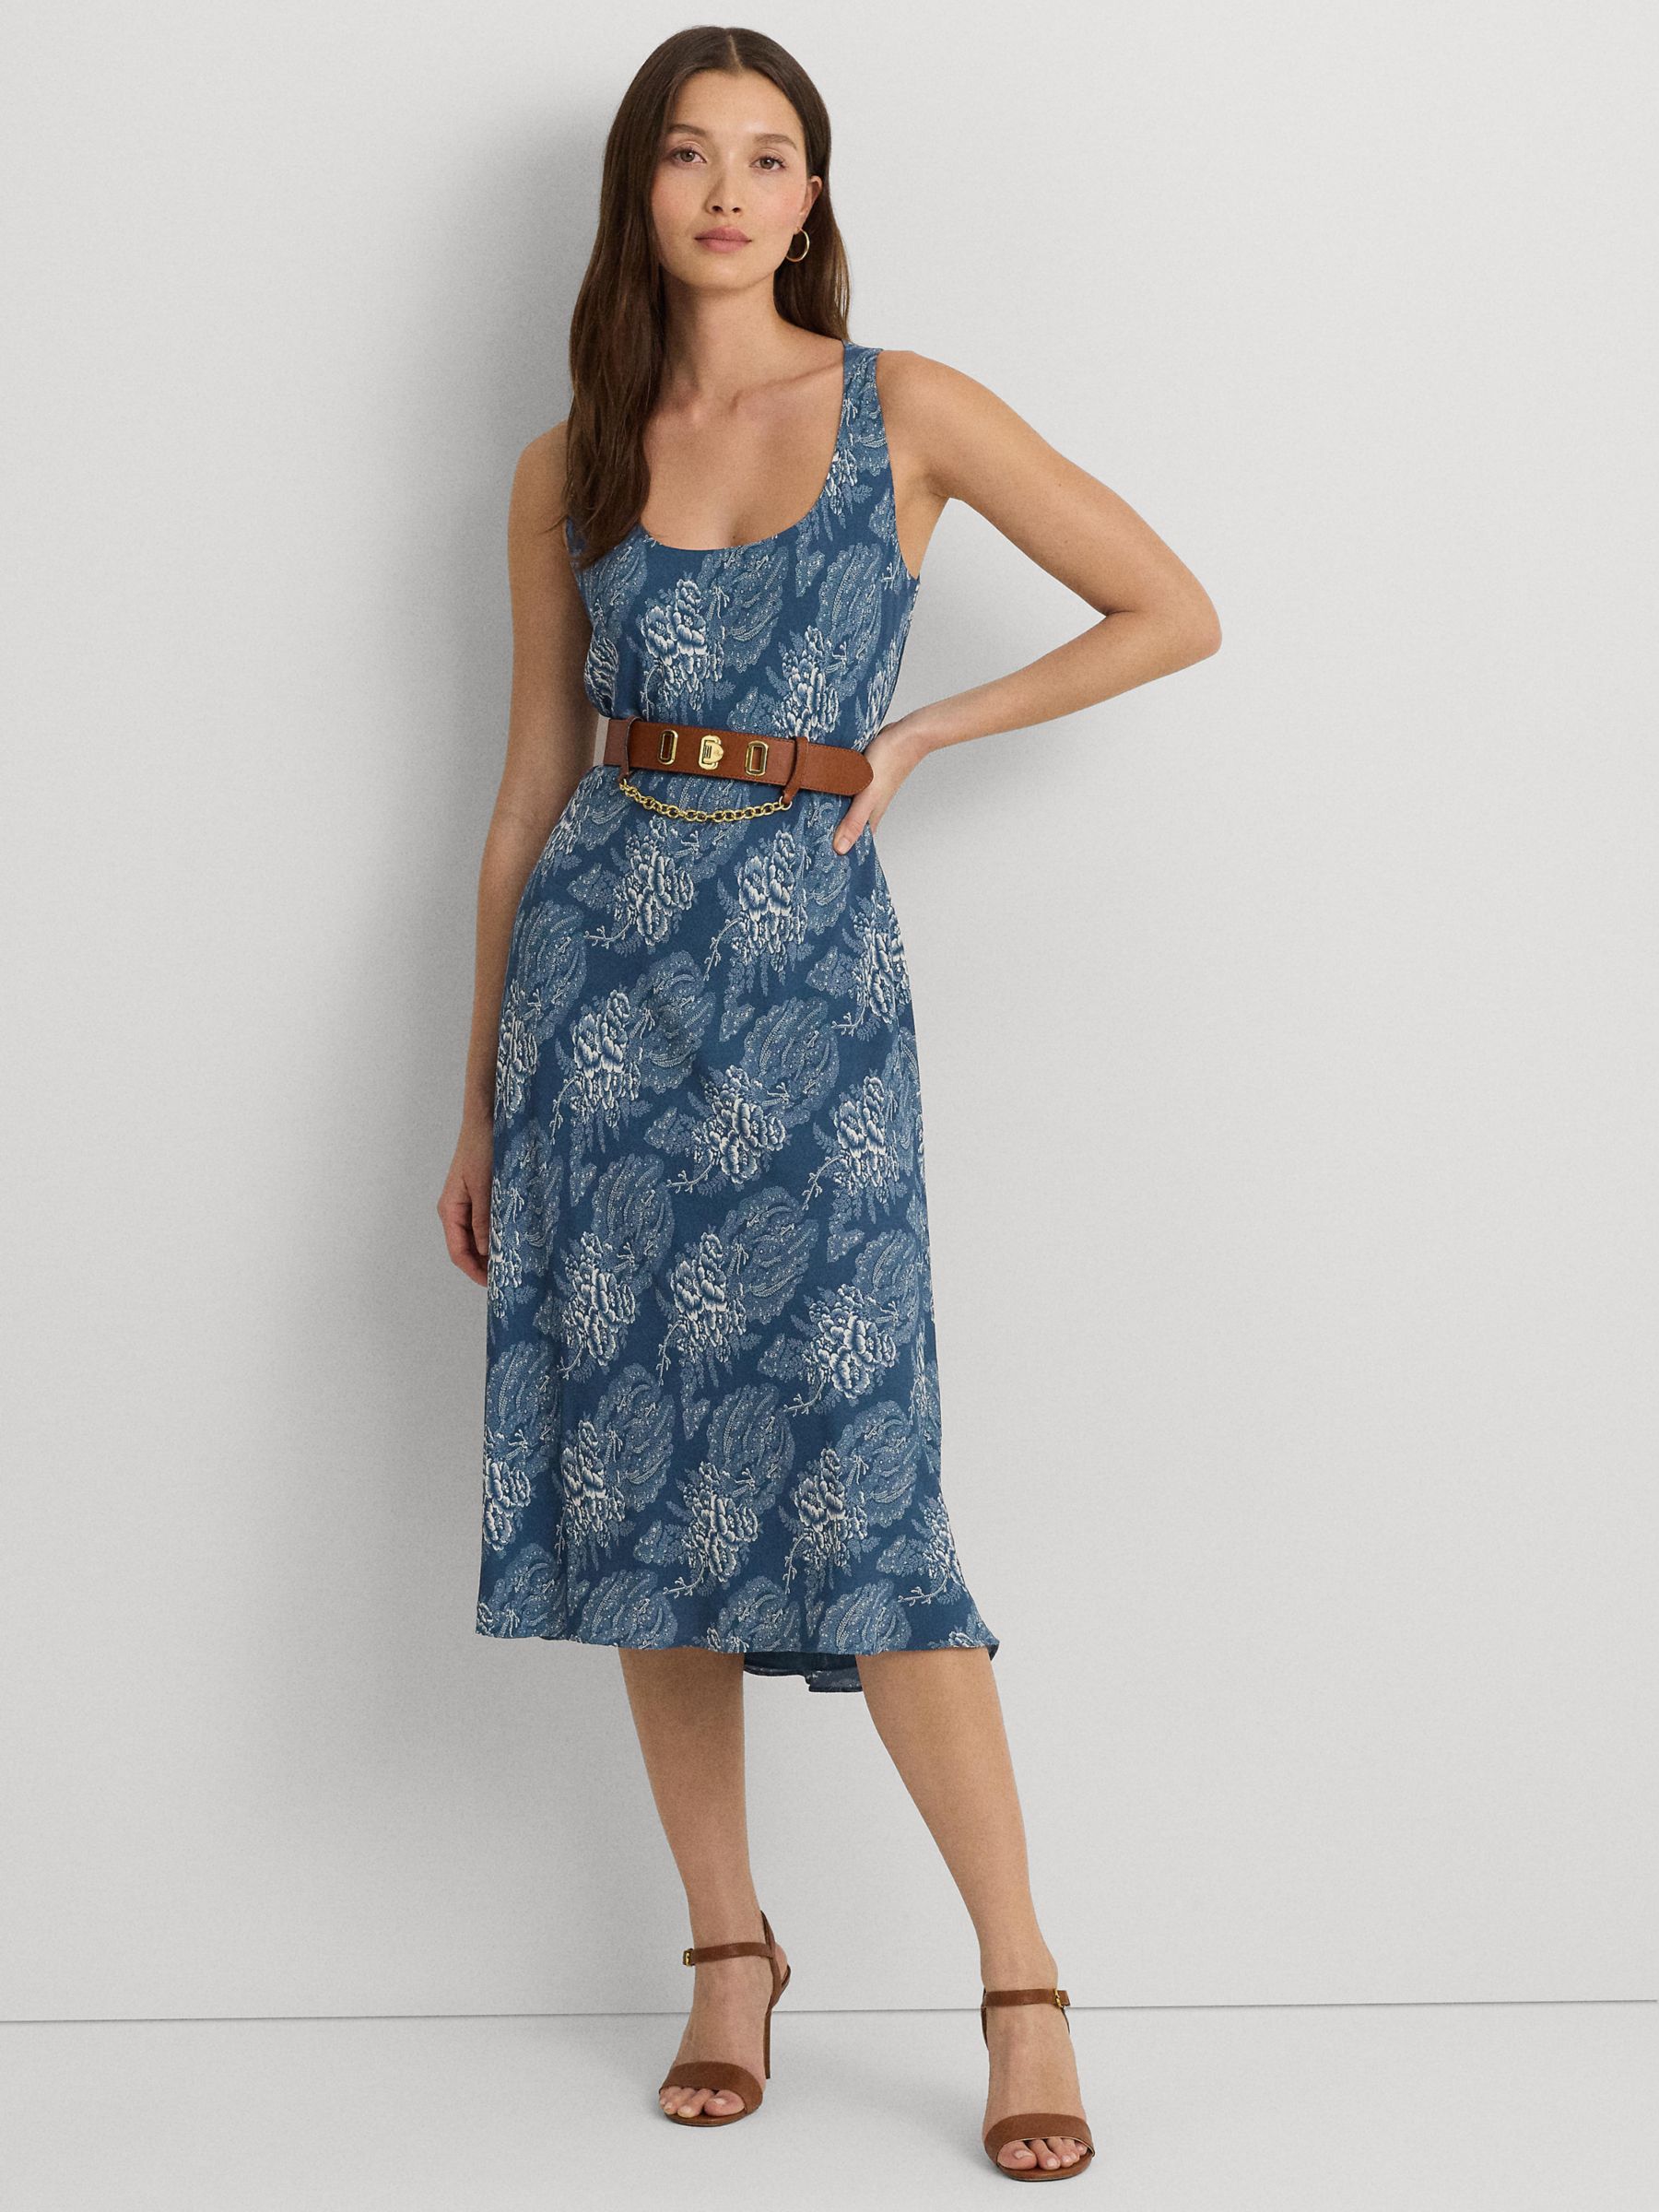 Lauren Ralph Lauren Zawato Floral Dress, Blue, 6